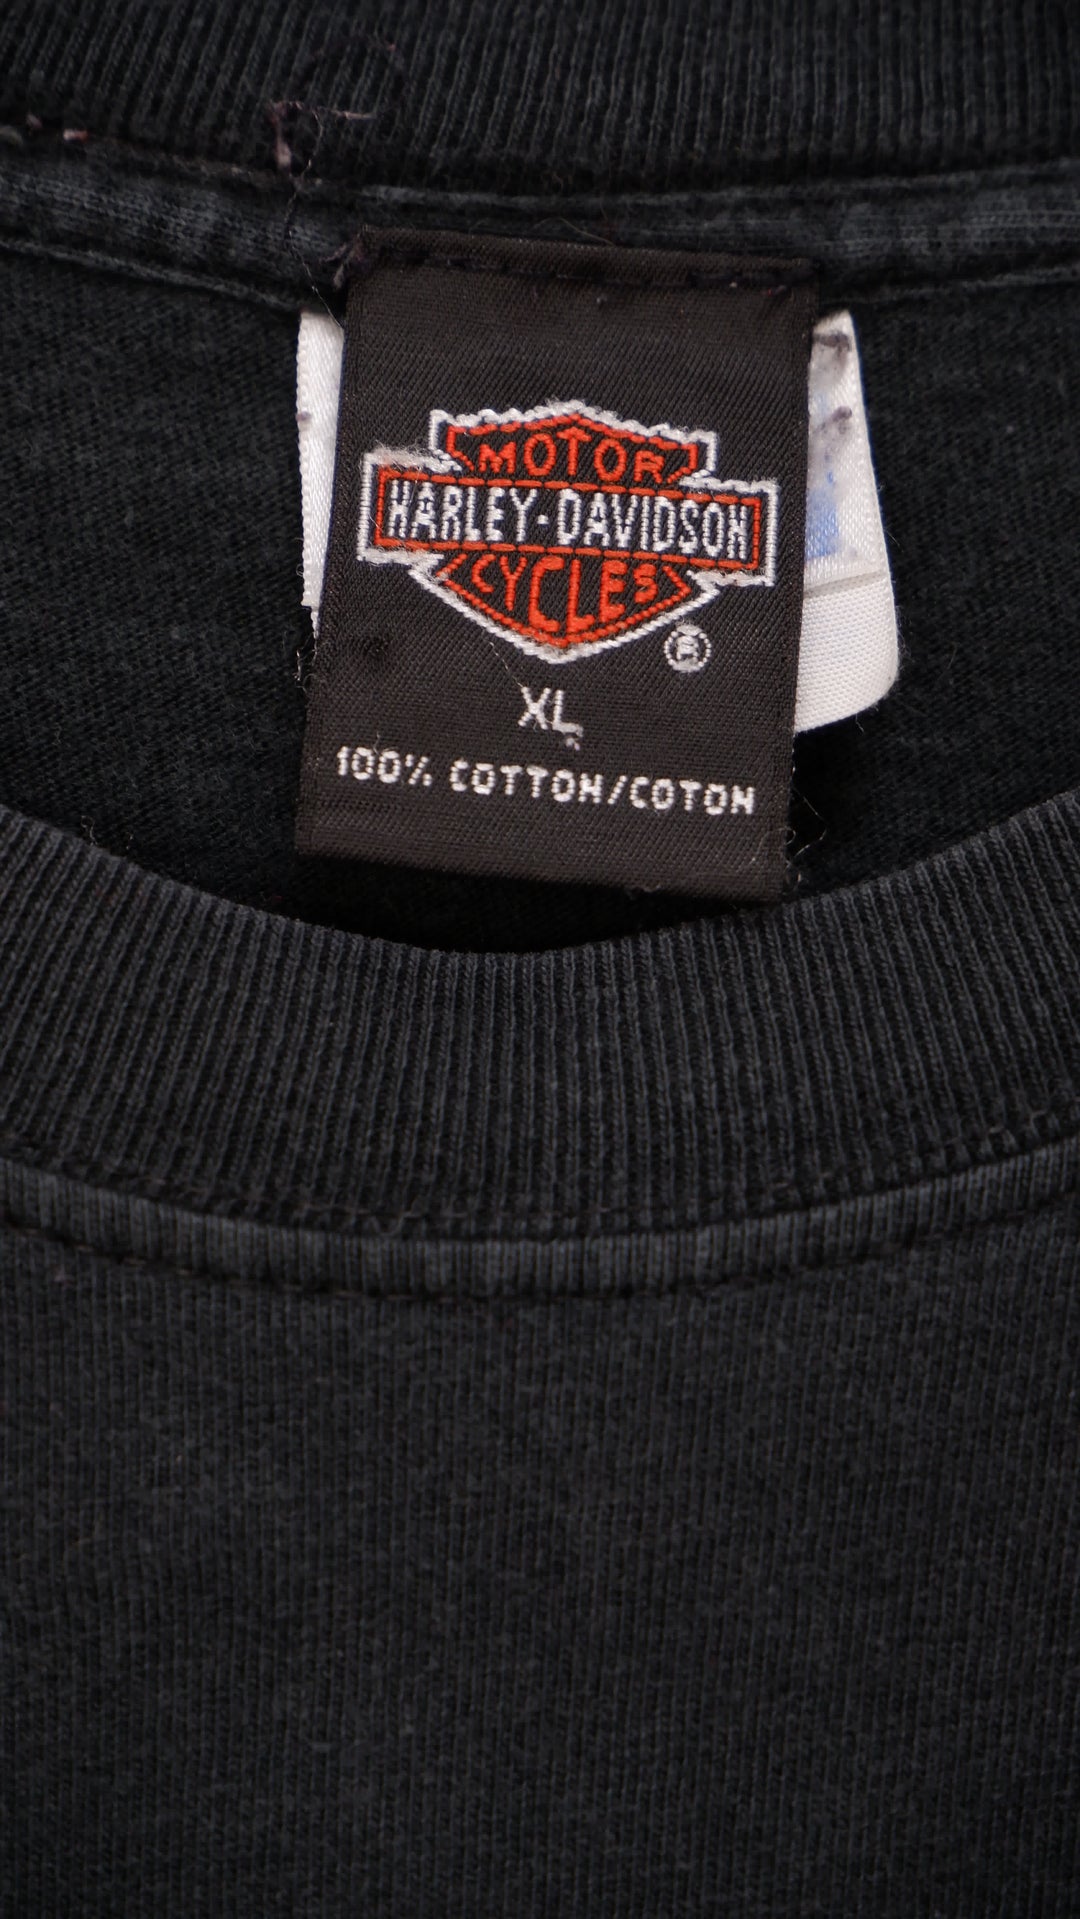 Vintage Harley Davidson Motorcycles T-Shirt Made In USA